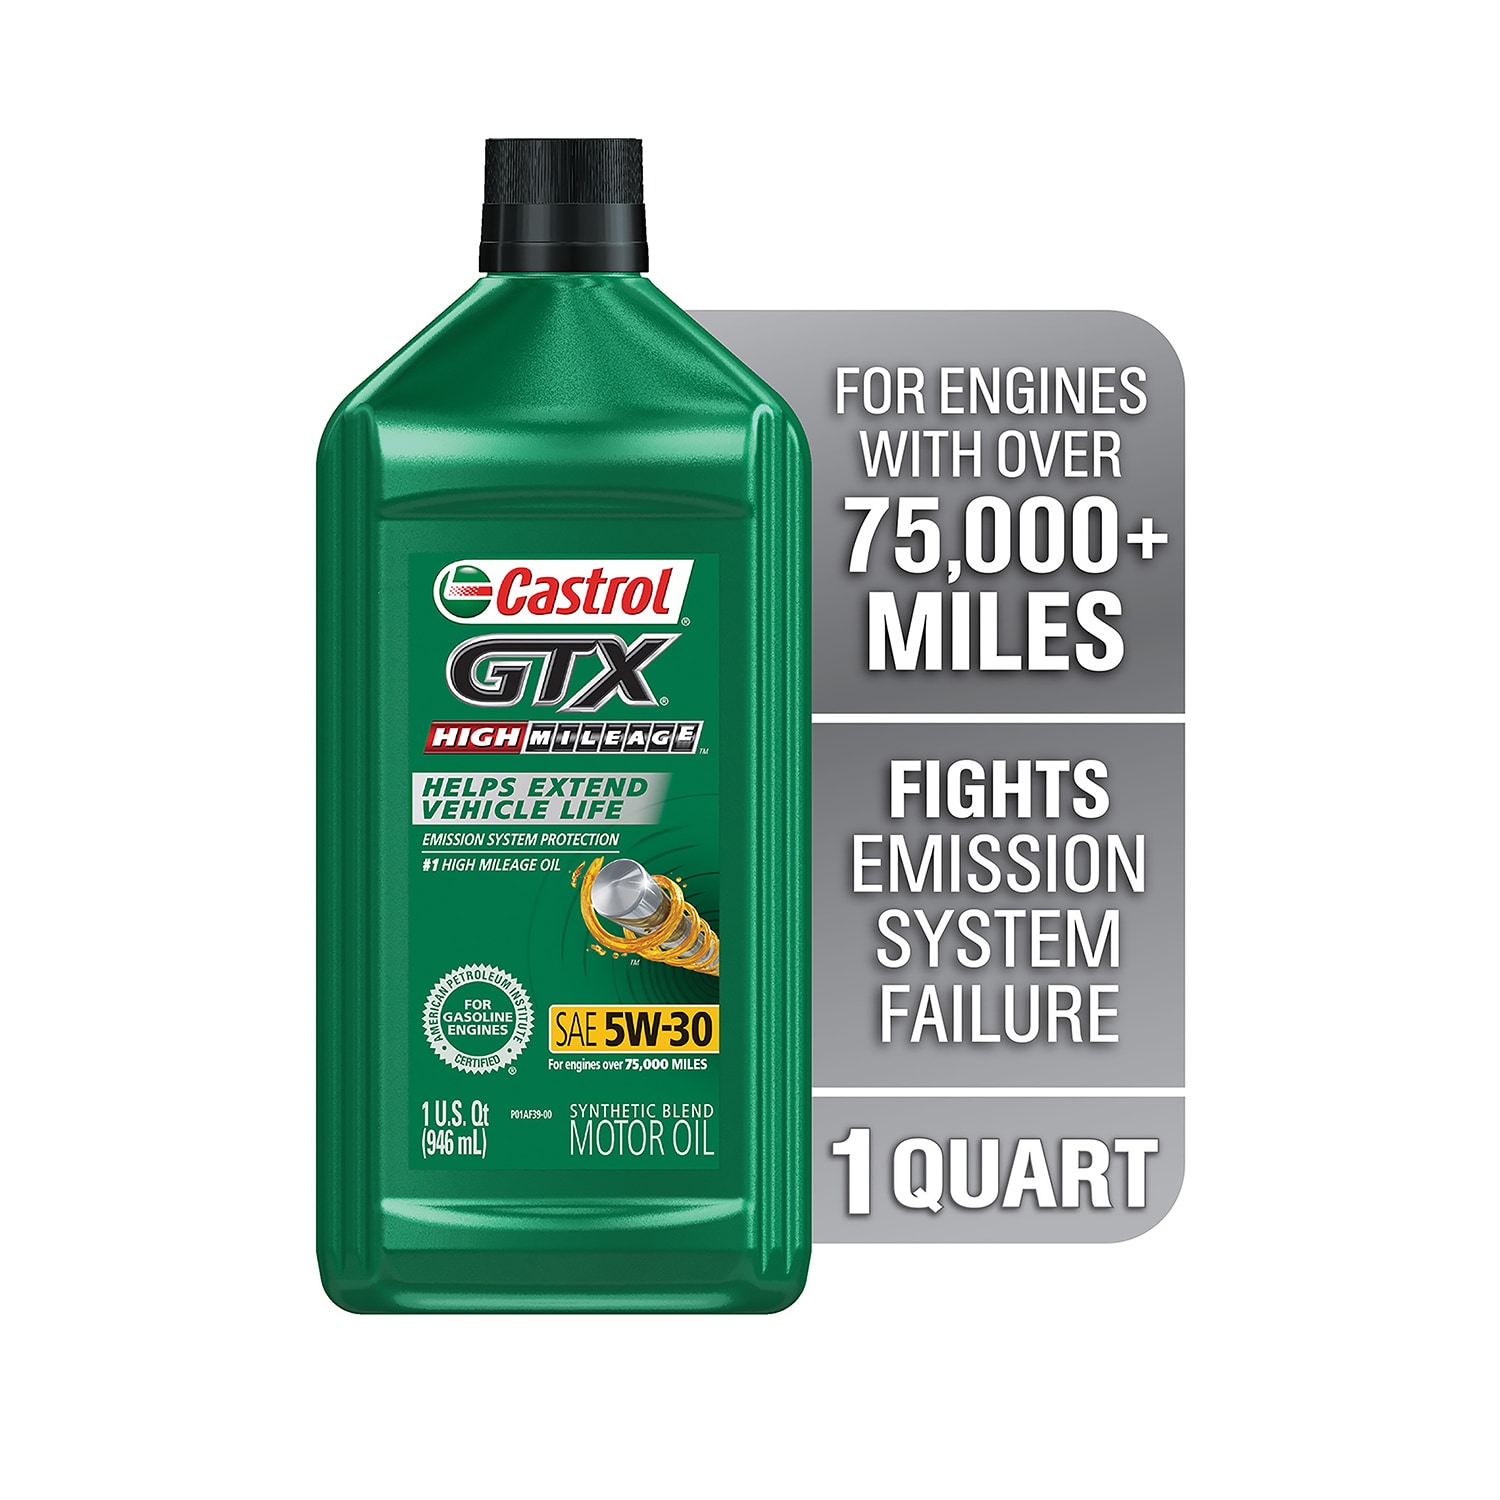 CASTROL GTX High Mileage 5W-30 Synthetic Blend Motor Oil, 5 Quarts